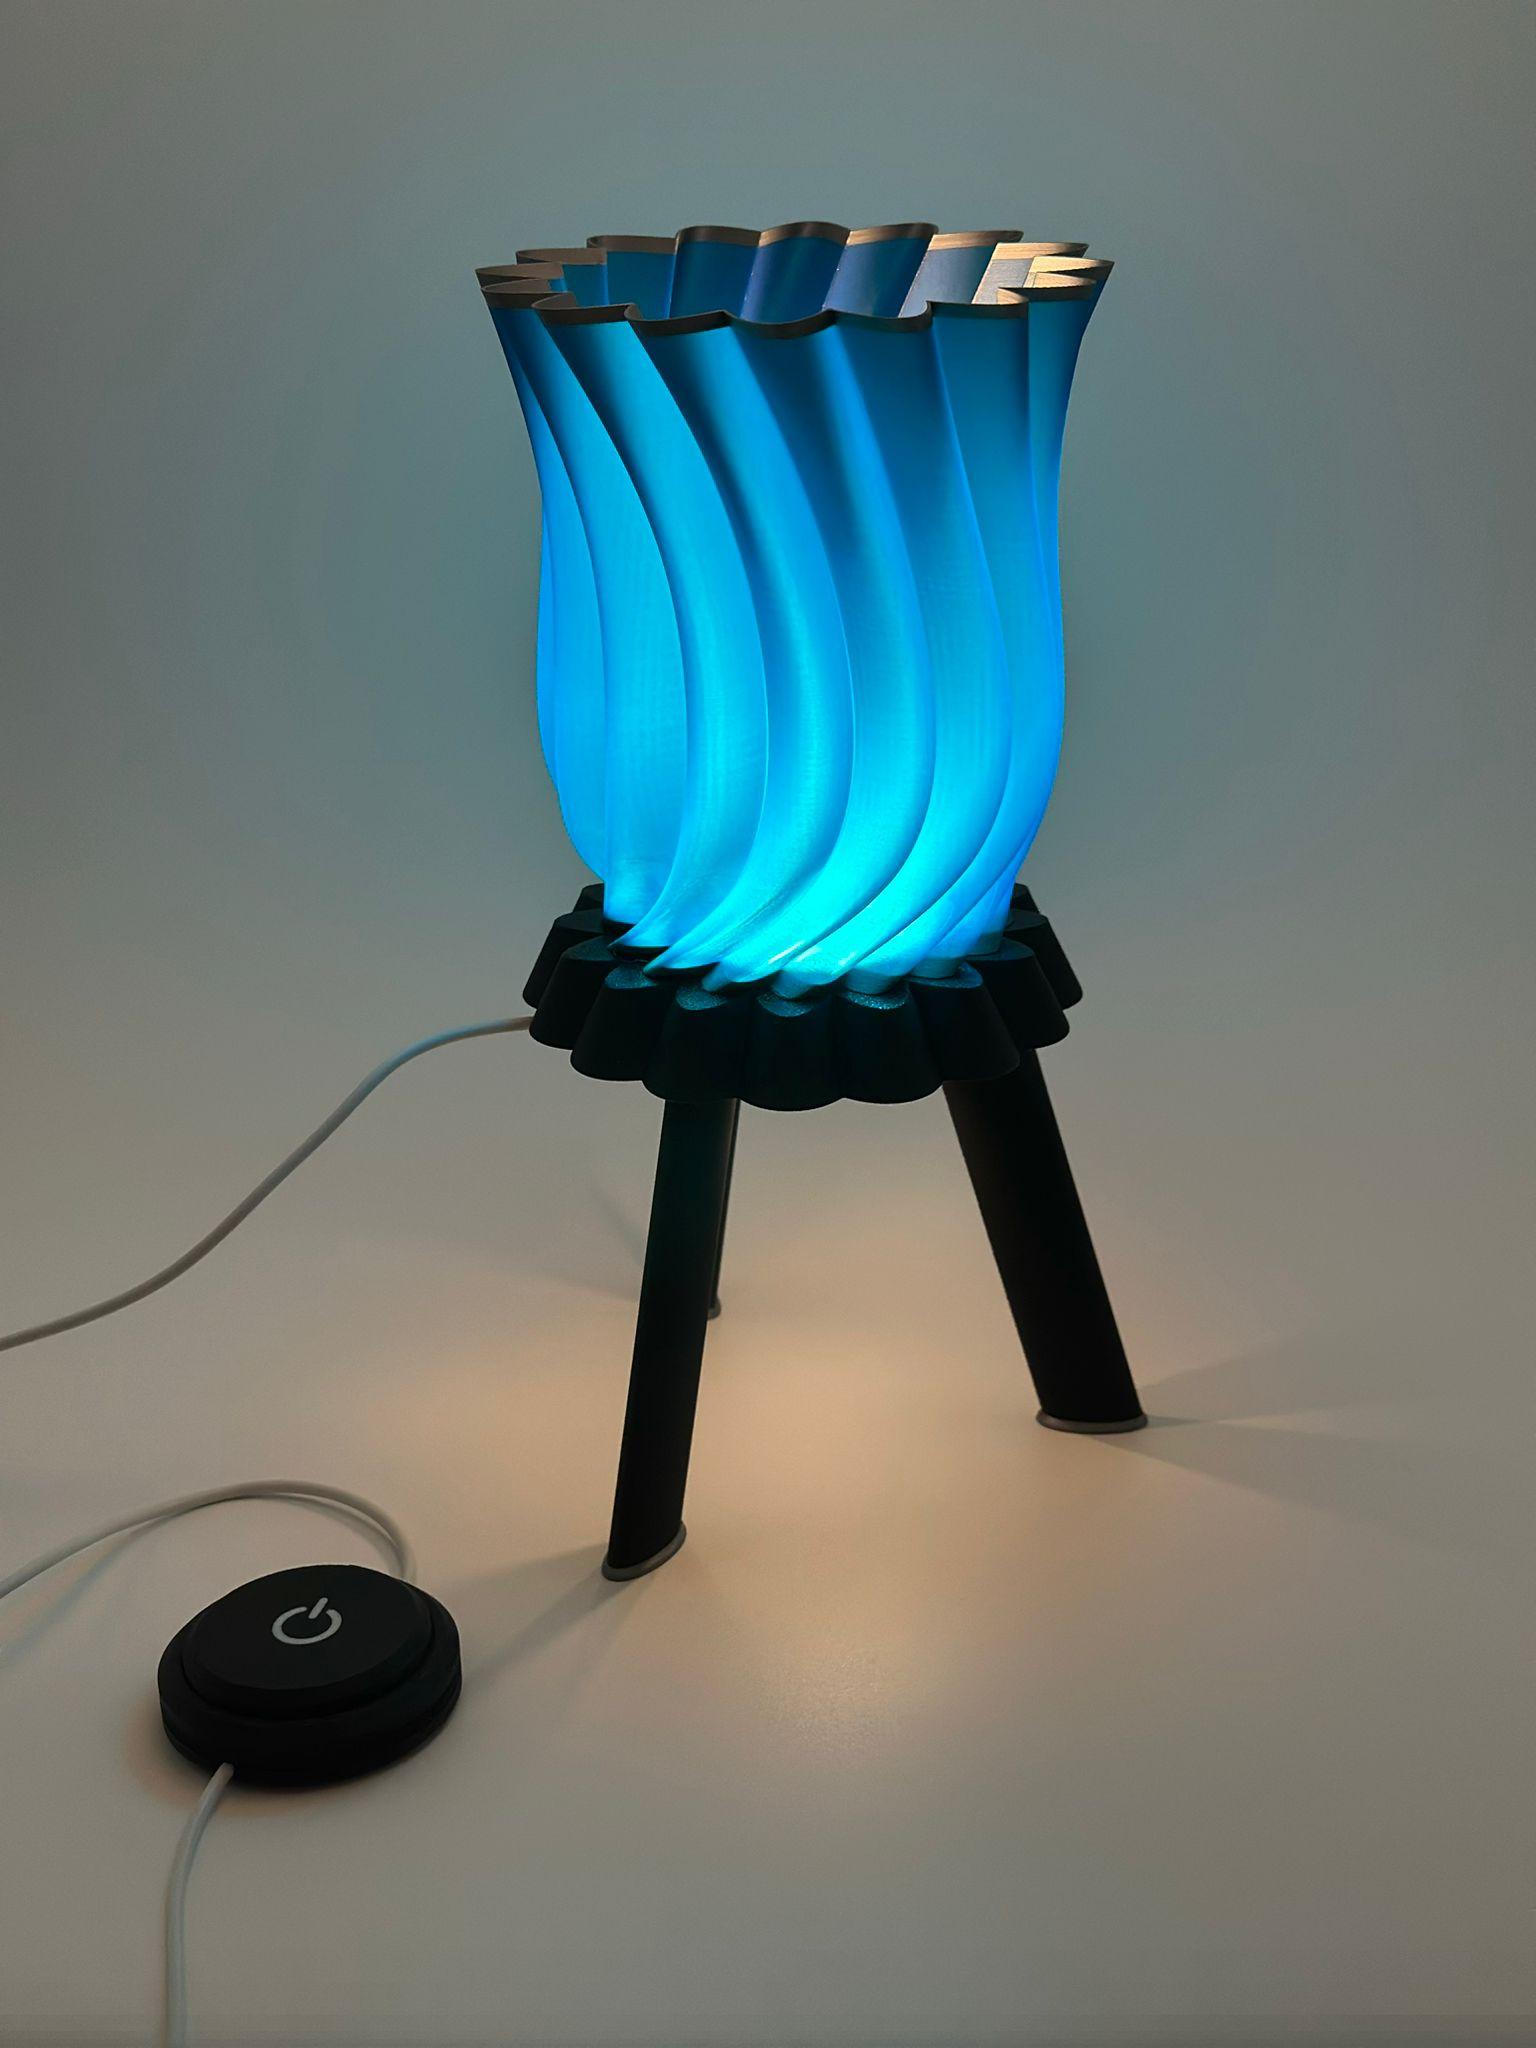  Lamp 9.6 3d model